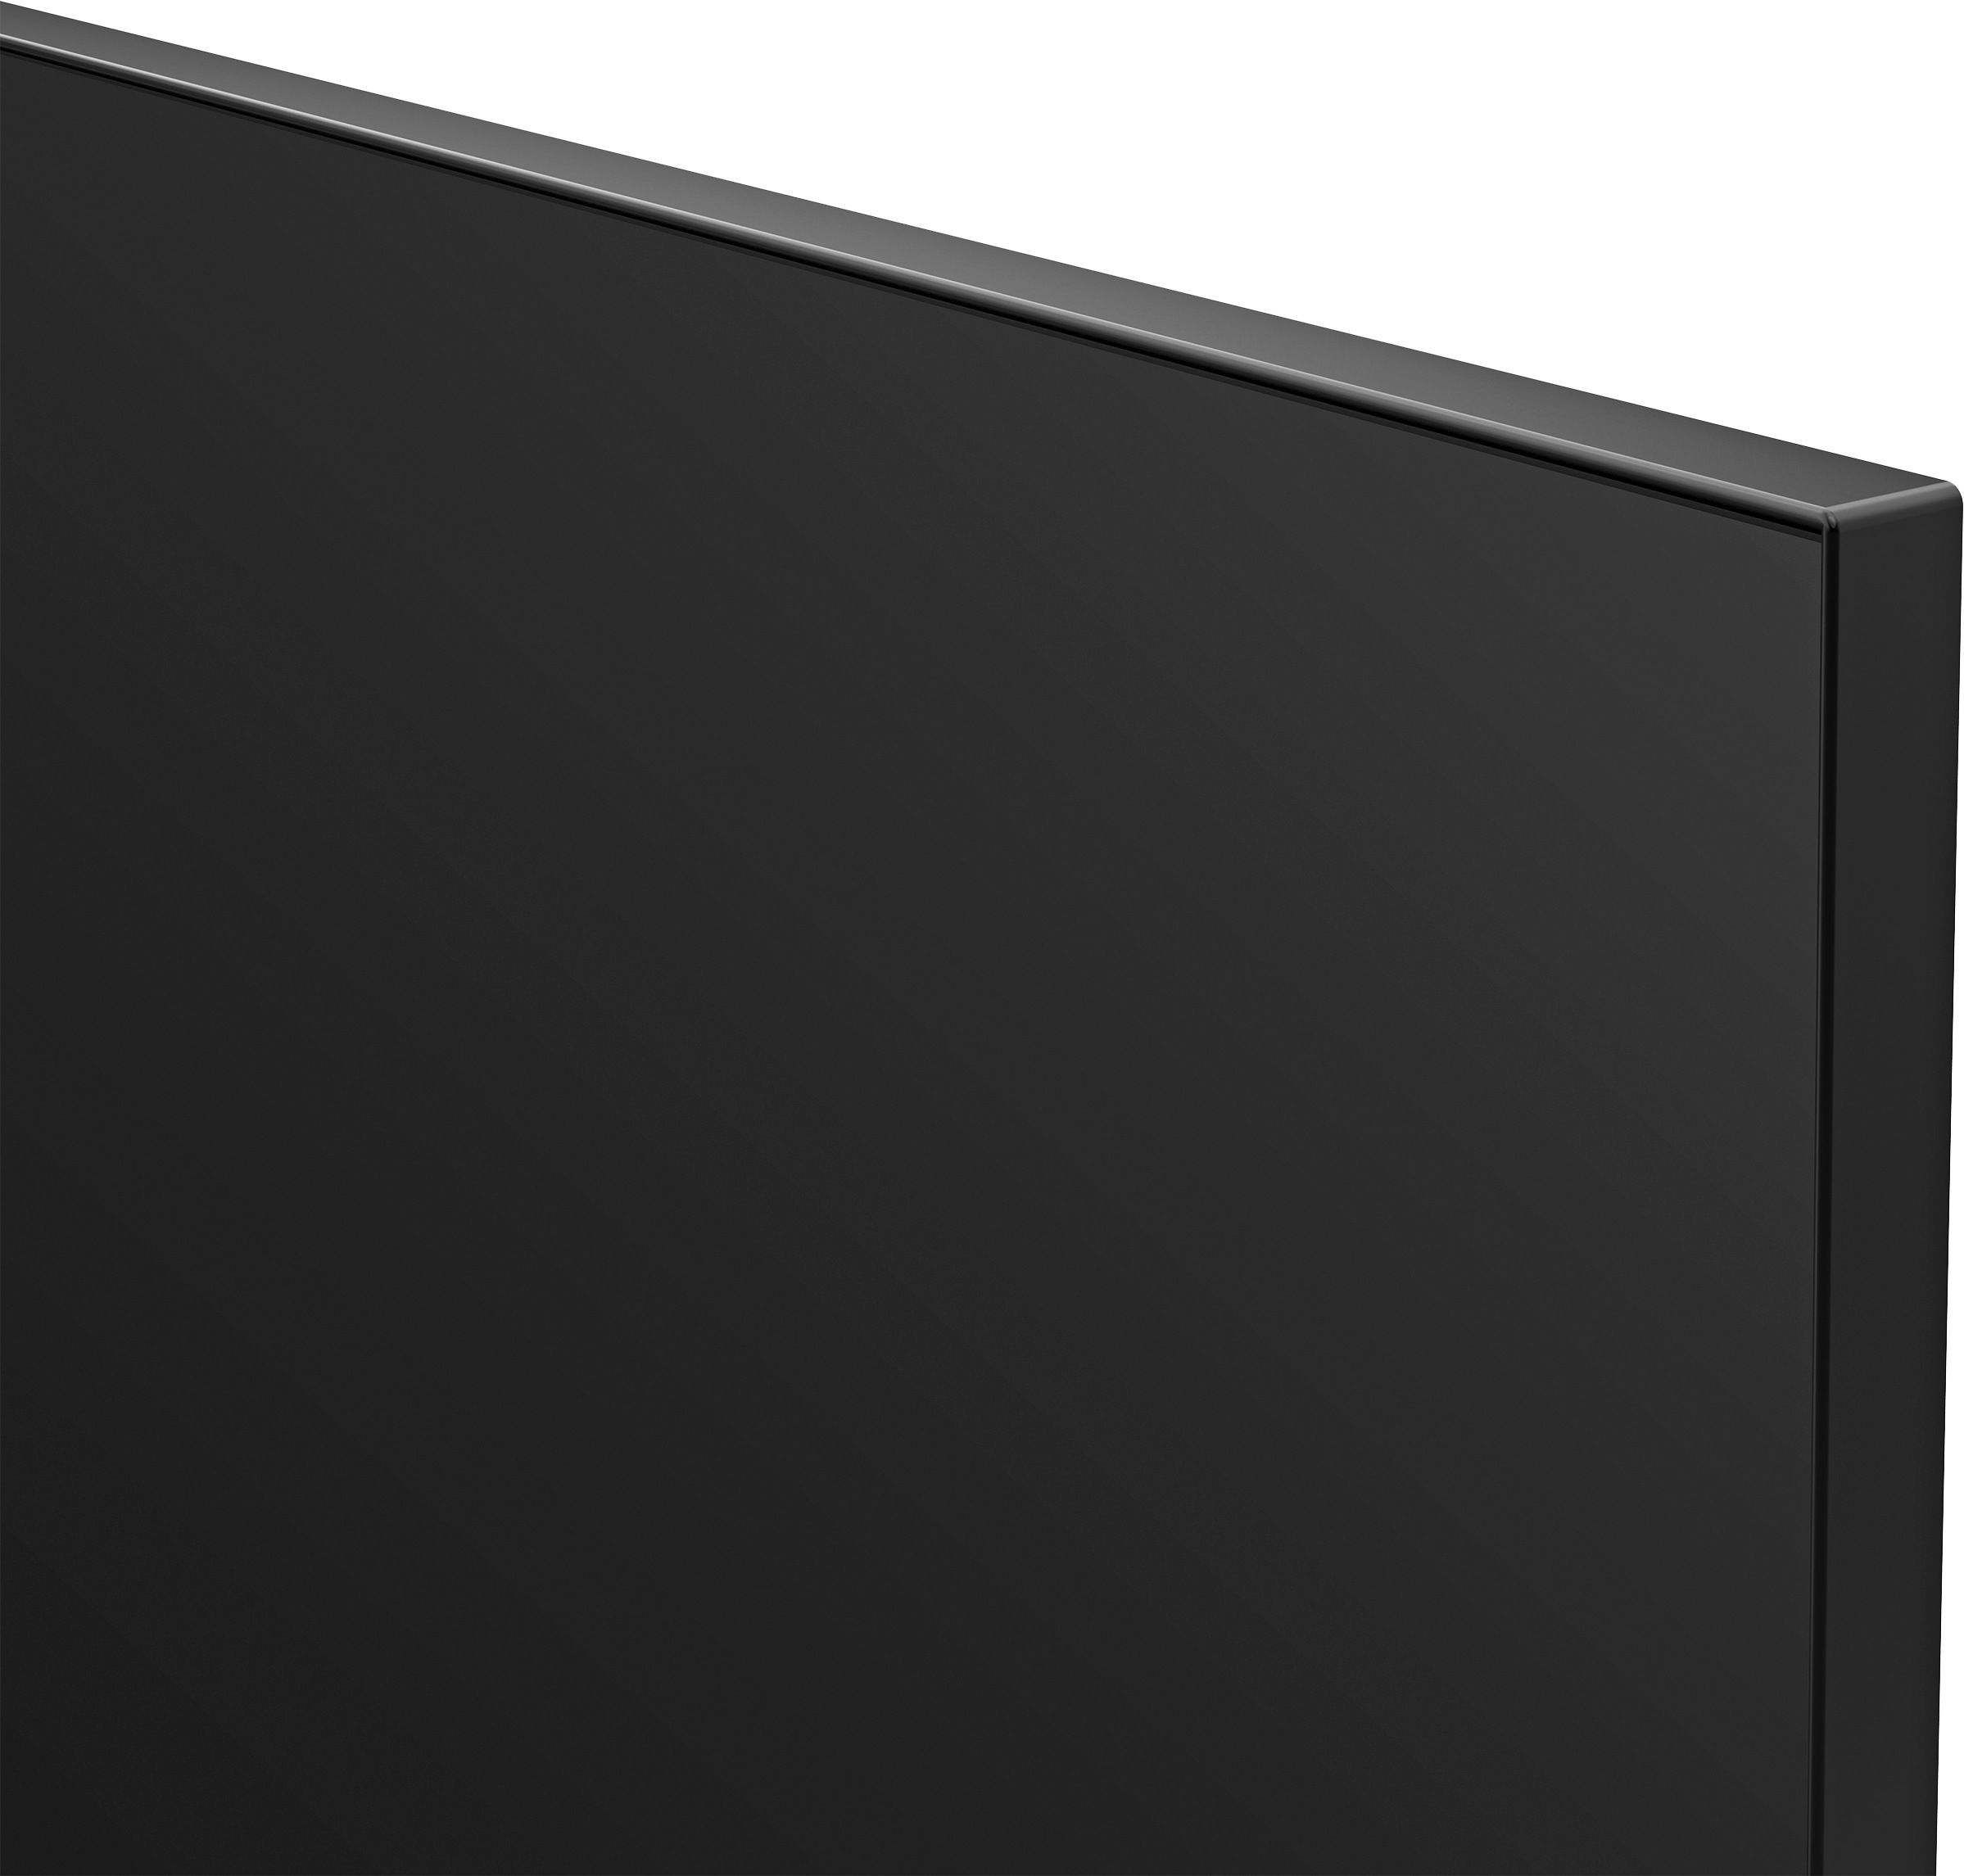 Hisense LED-Fernseher »32A4FG«, 80 cm/32 Zoll, HD ready, Smart-TV